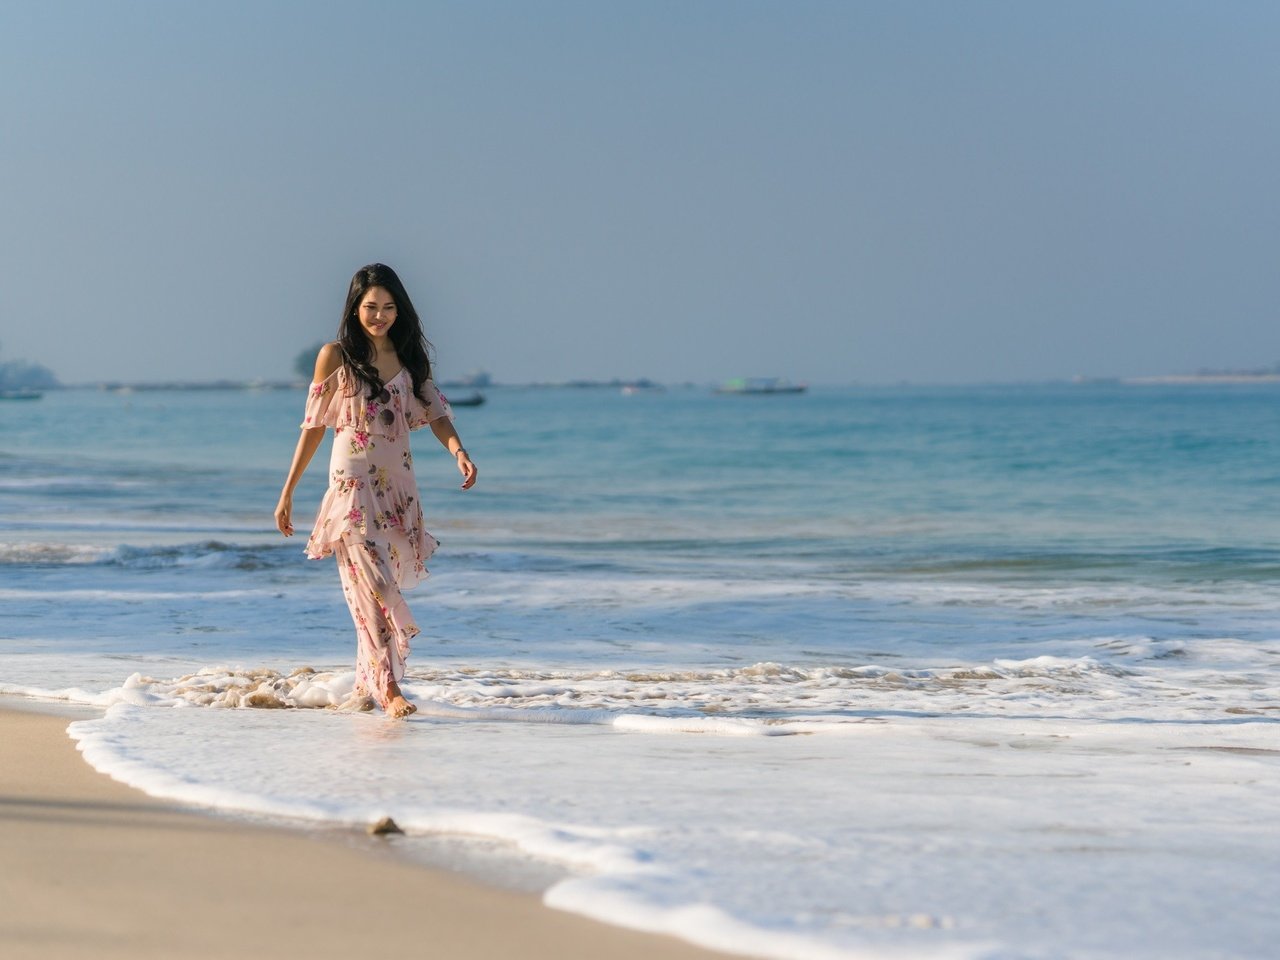 Фото девушки с тонкой талией на берегу океана